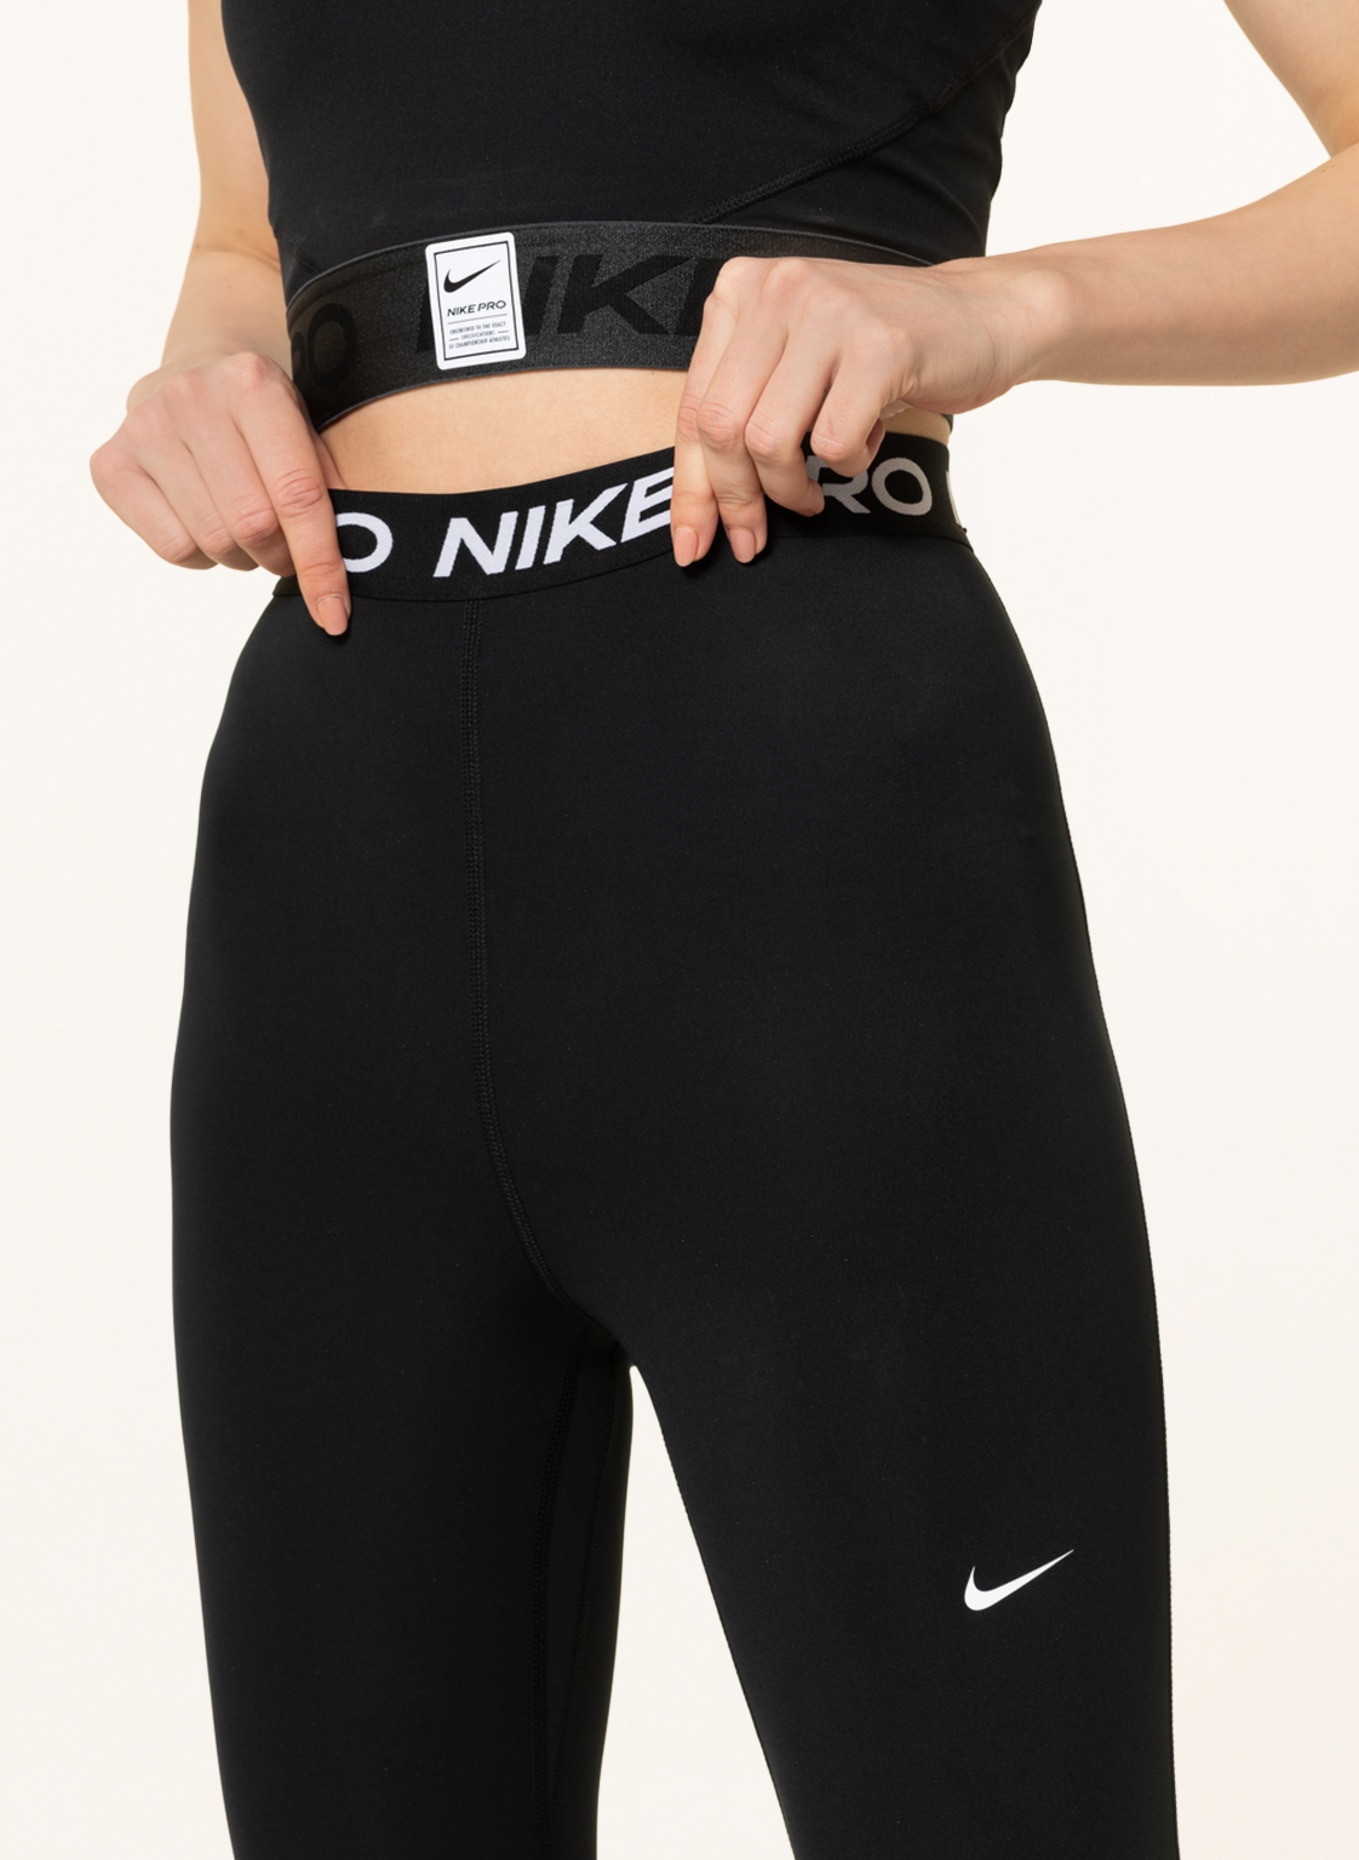 Nike Tights NIKE PRO 365 with mesh